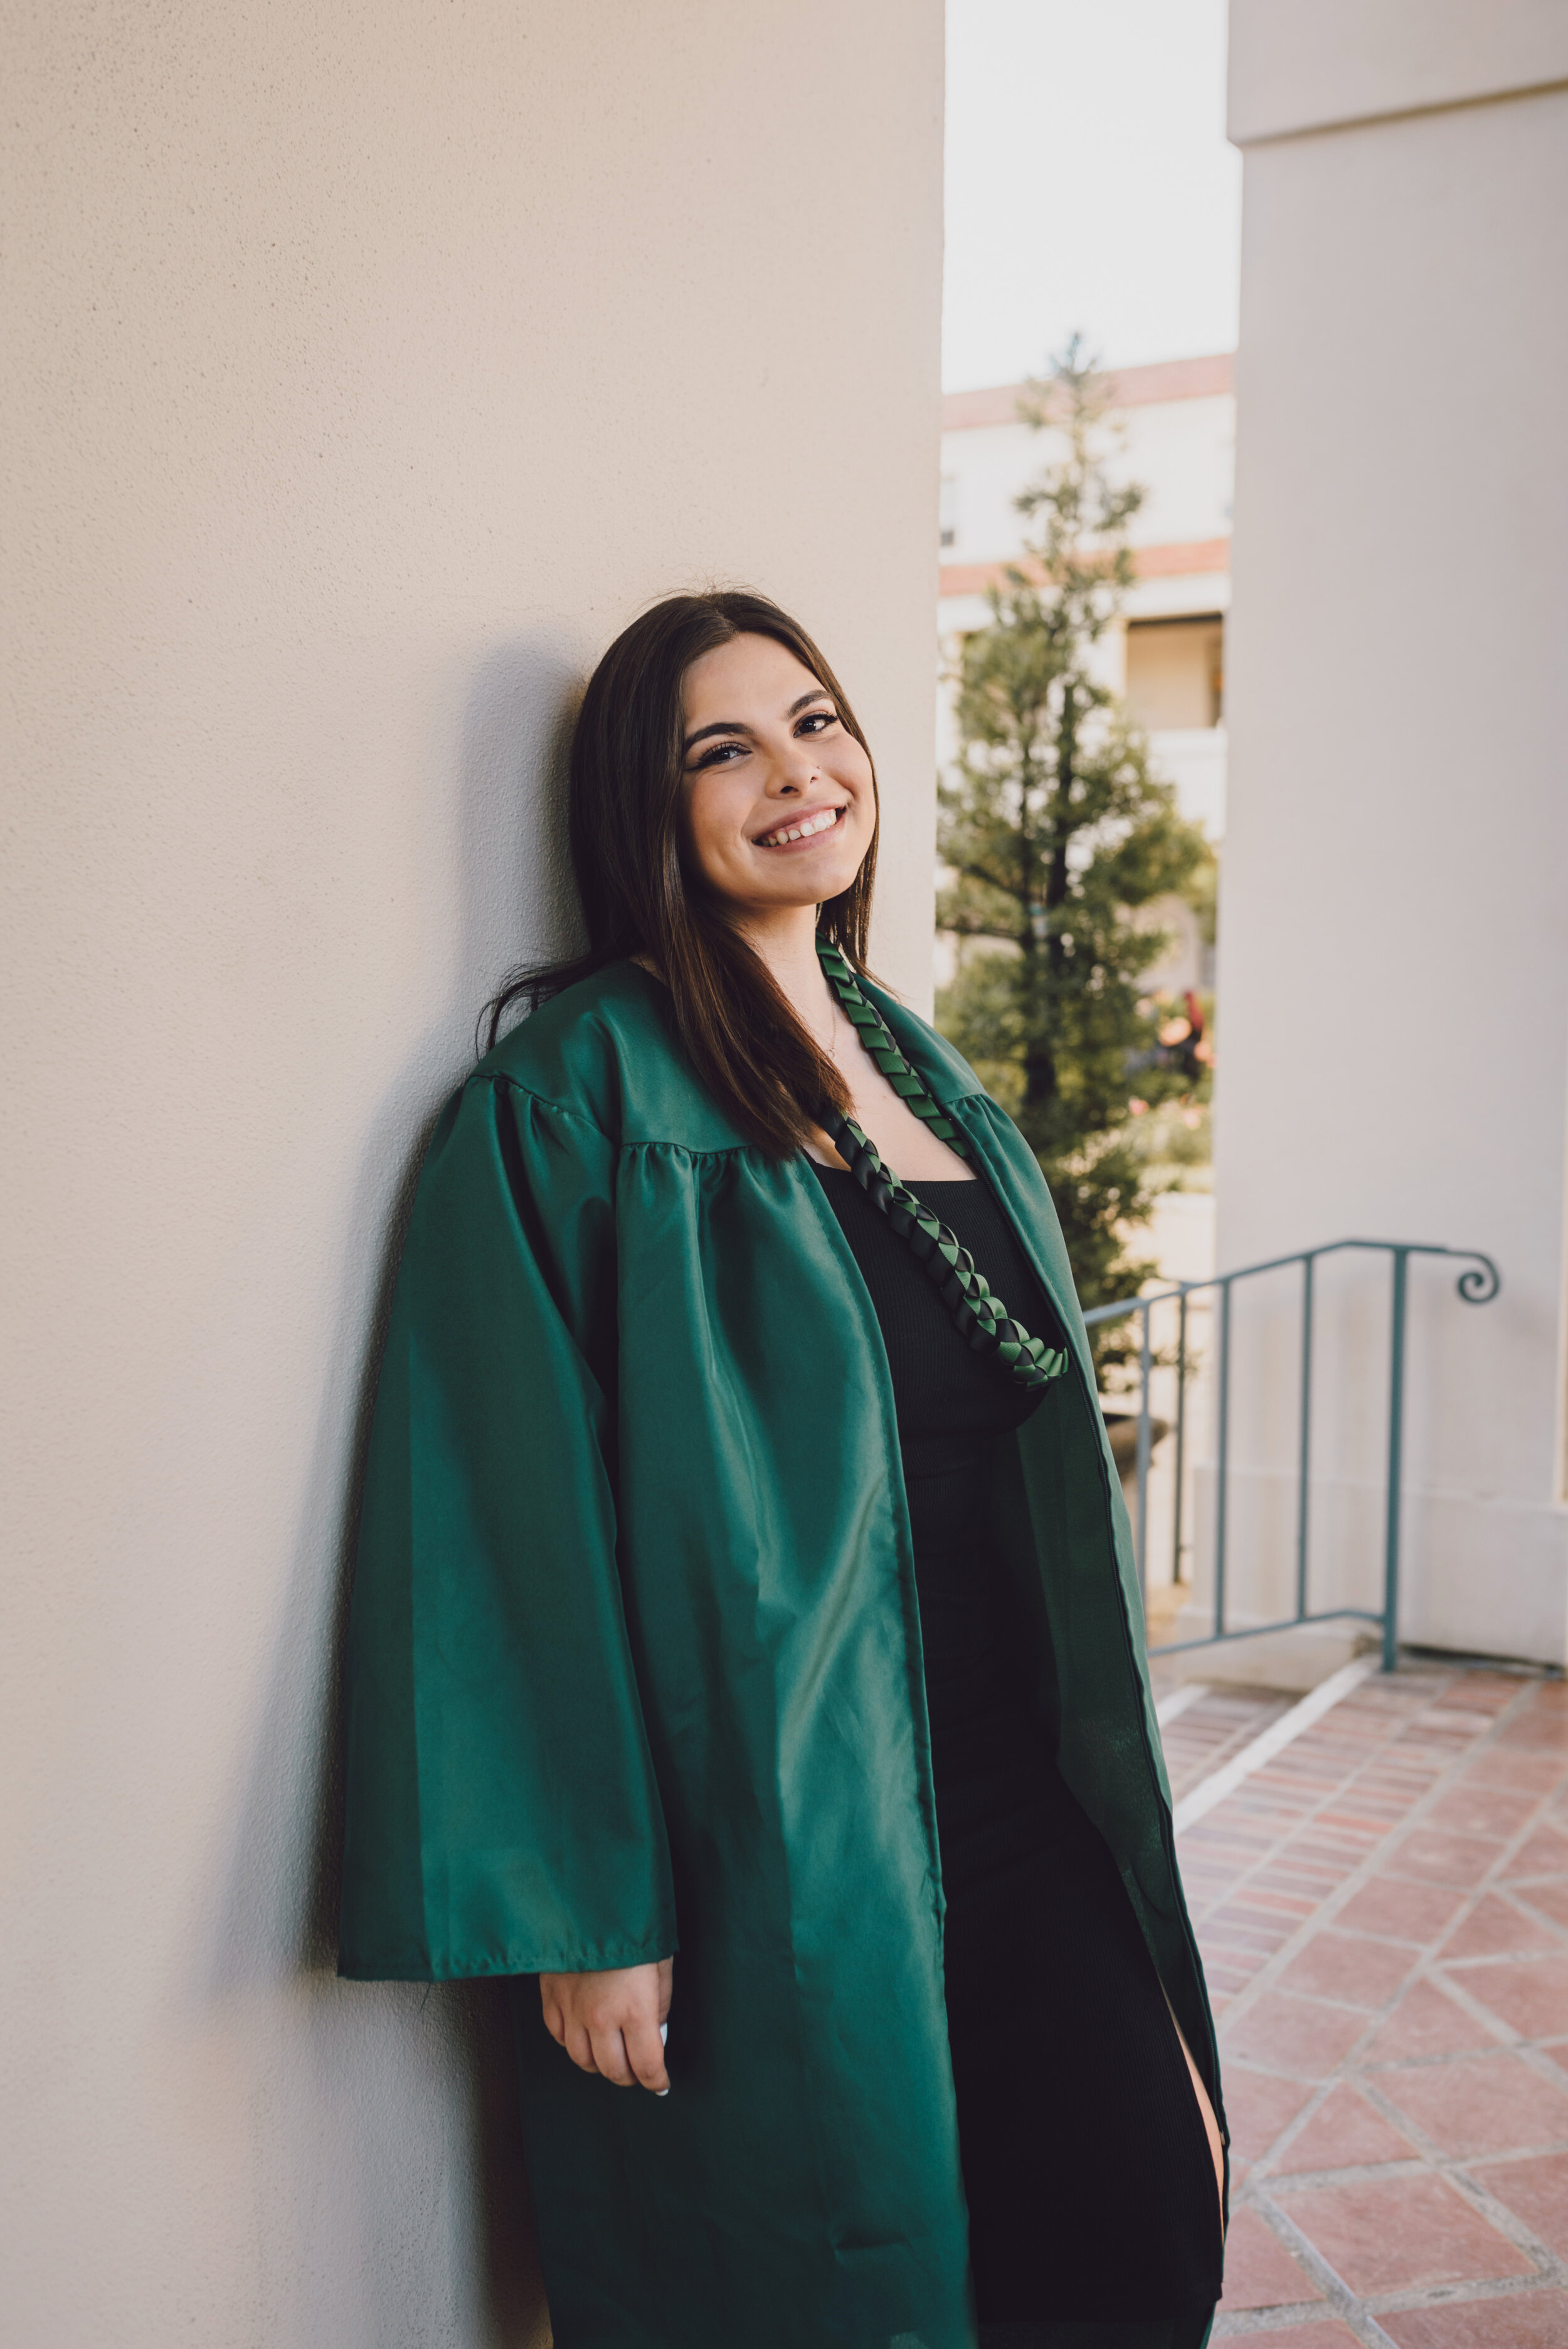 LosAngeles-Graduation-Portrait-Photographer-High-School-17.jpg